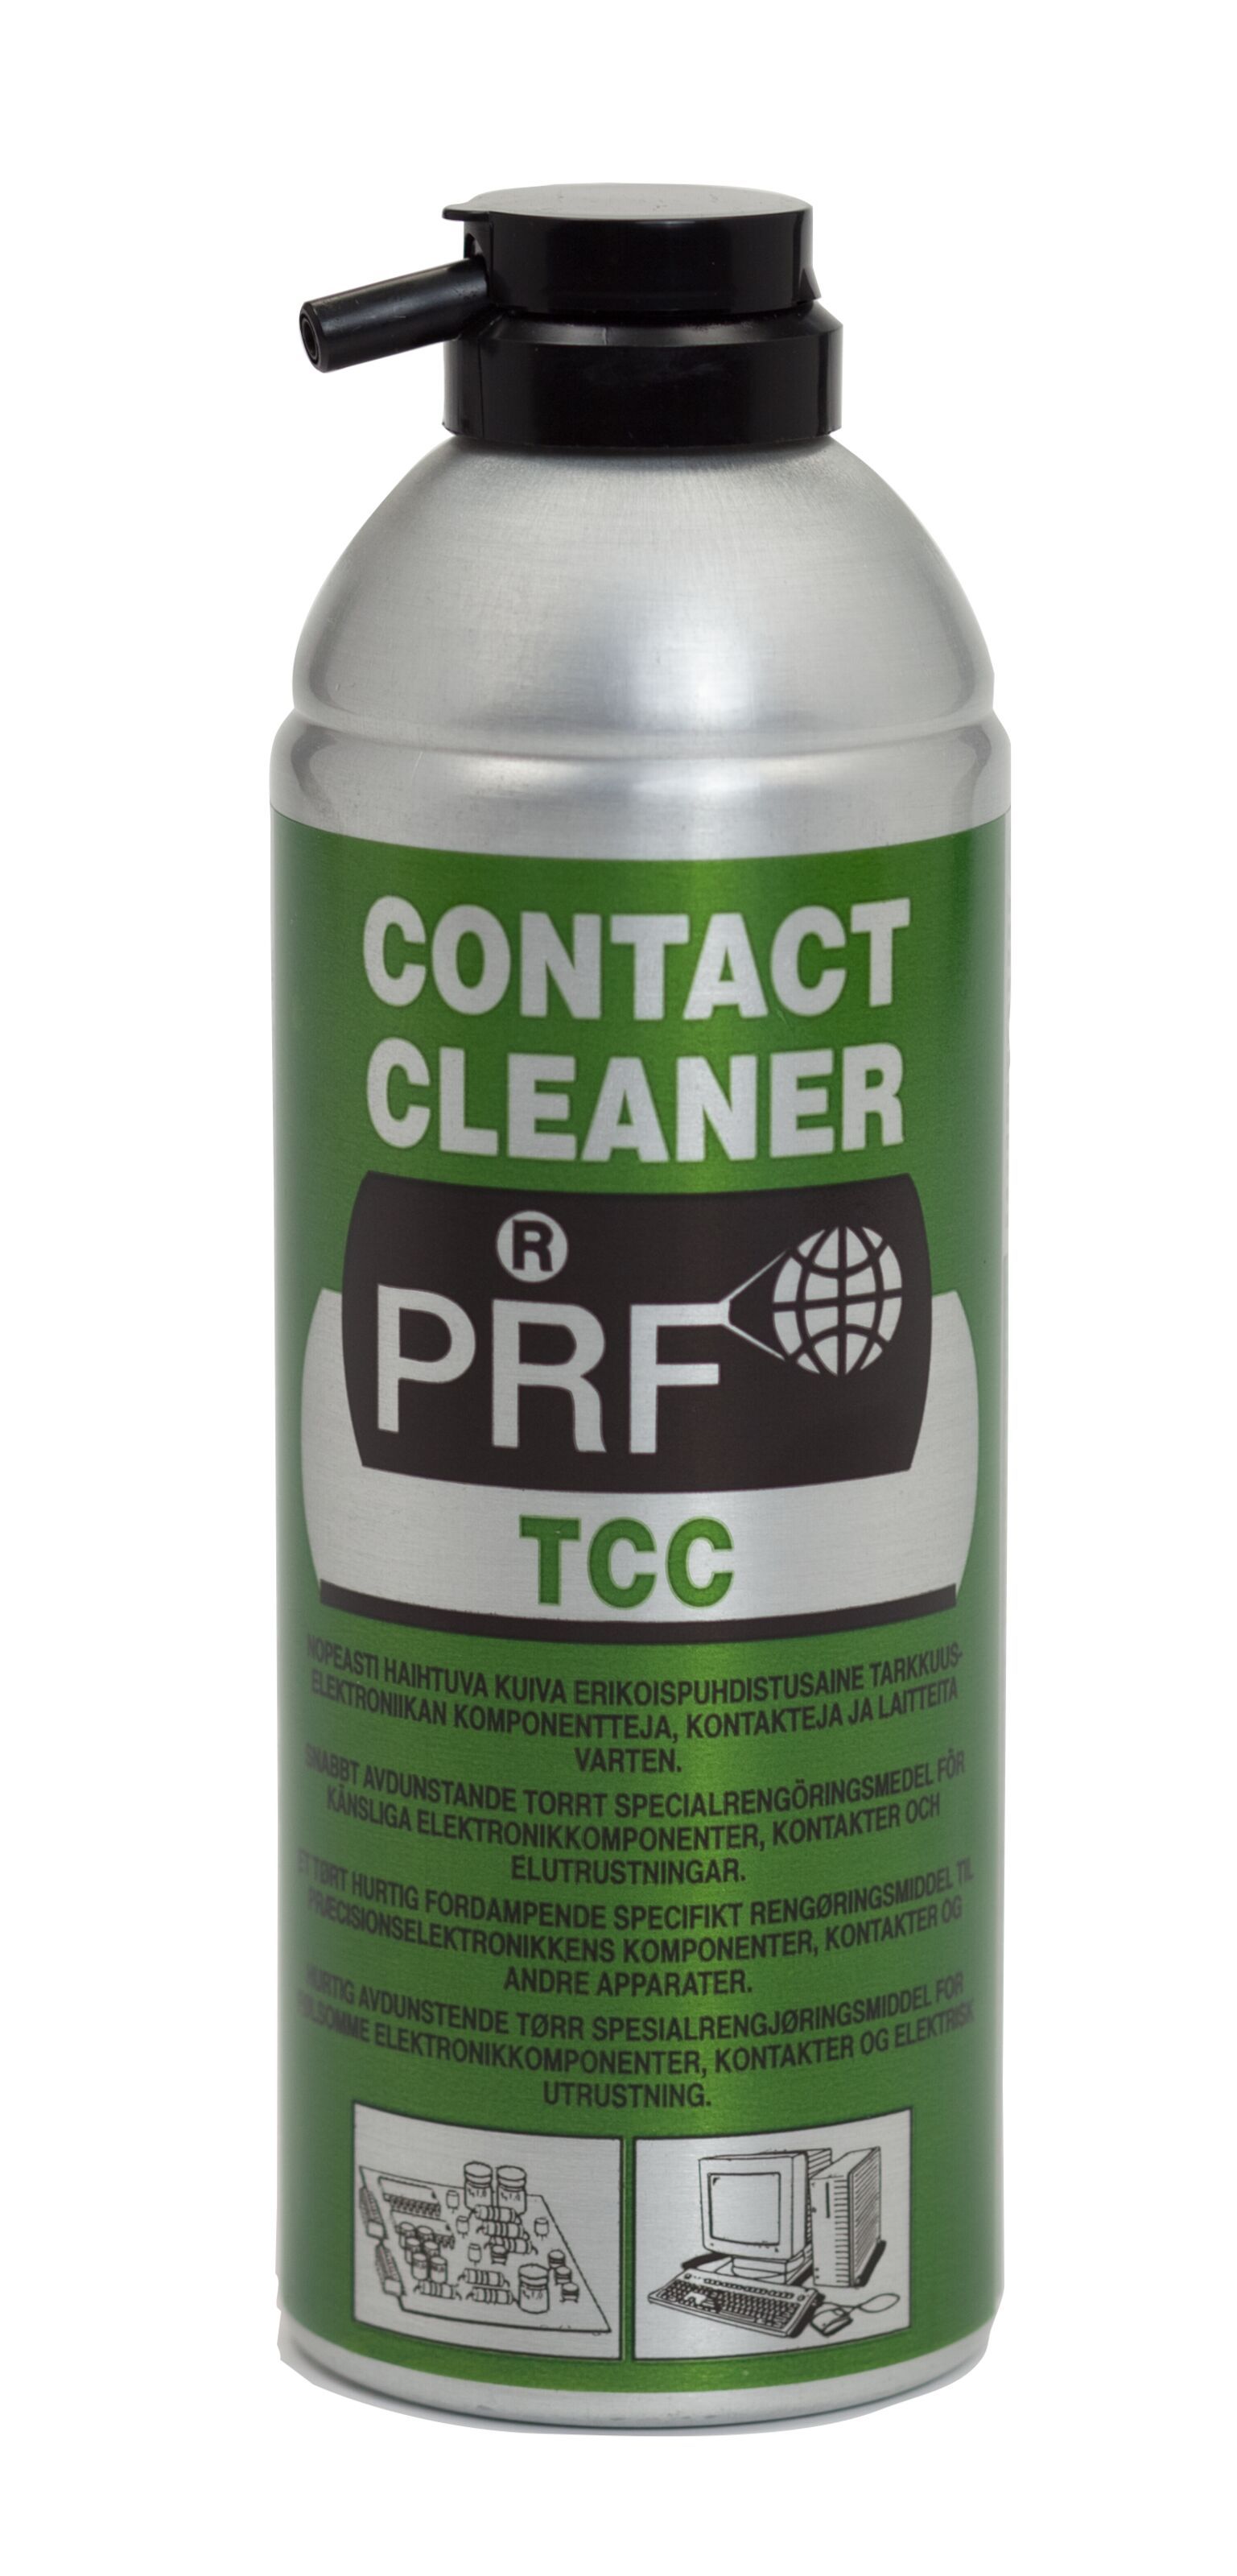 prf-tcc-kontaktspray-spray-olja-isopropanol-kjell